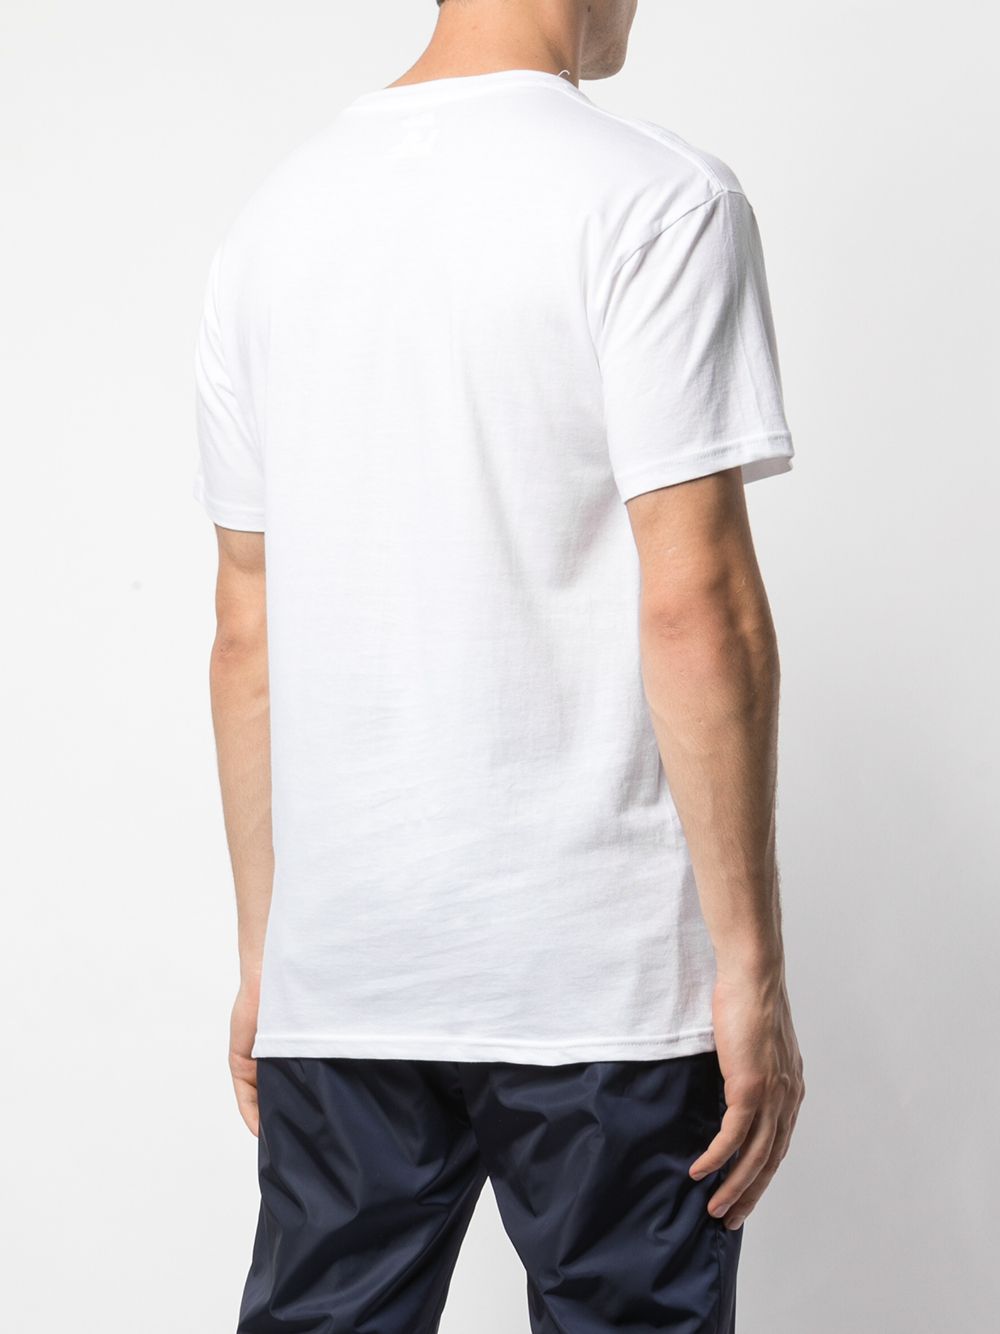 Supreme Hanes Tagless Tee T-Shirt - White - Medium - 1 Single Tee - 100%  Genuine • Tribunali Italiani